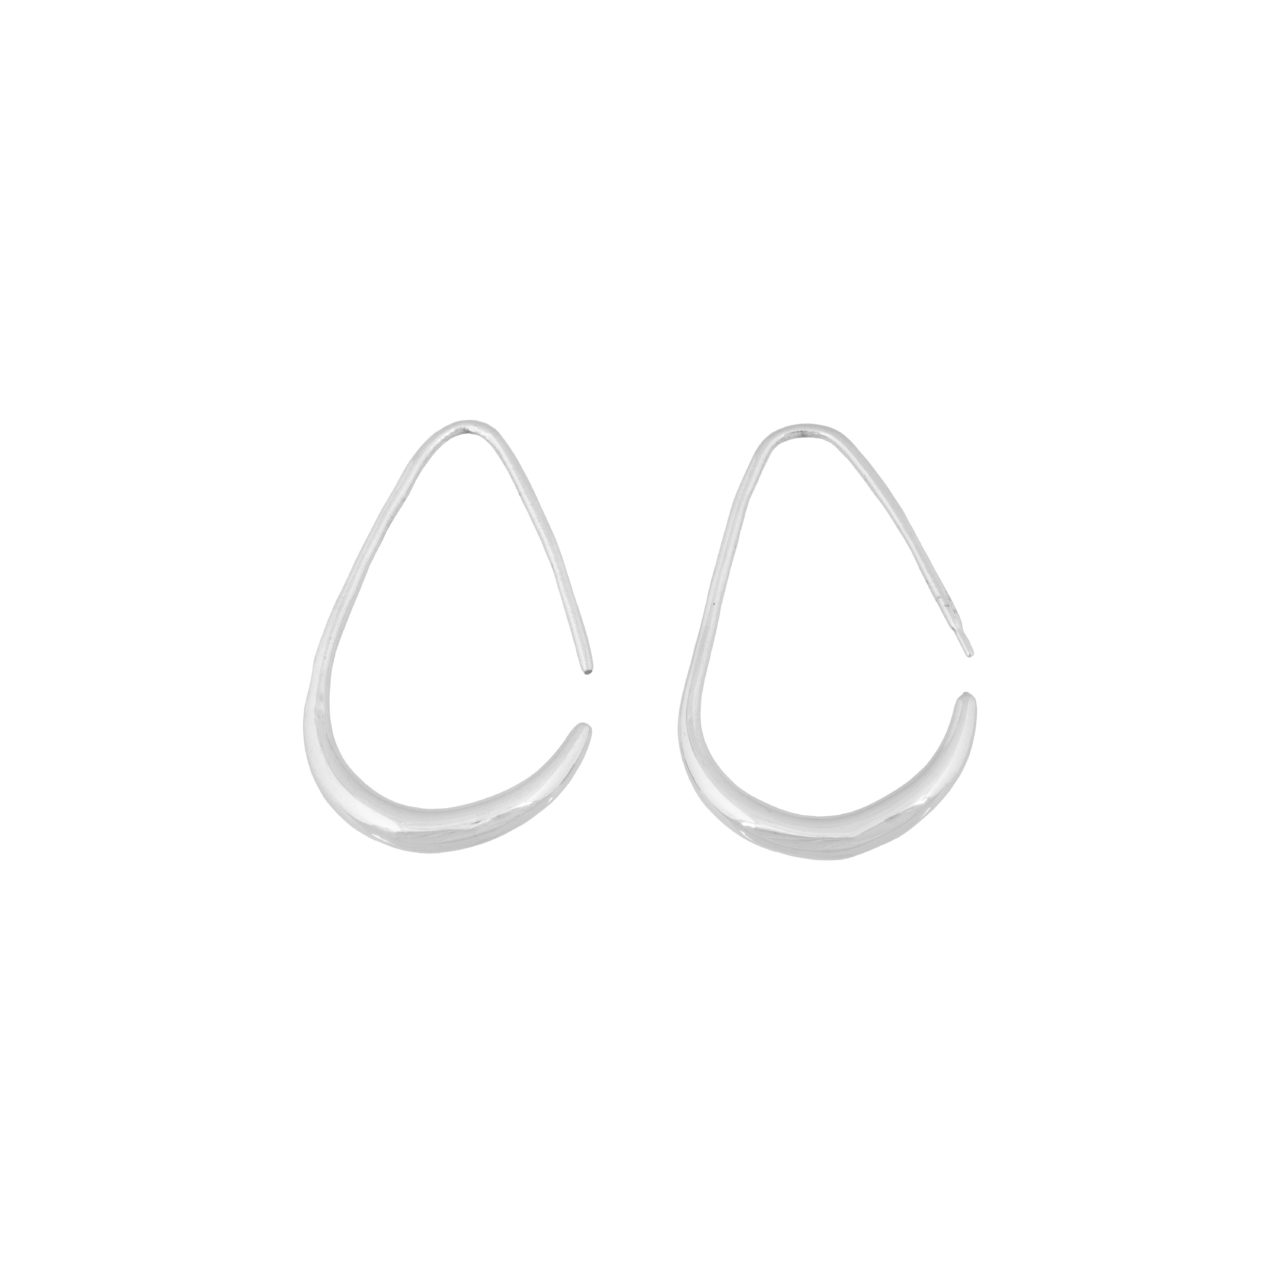 Teardrop earrings - Bandhu